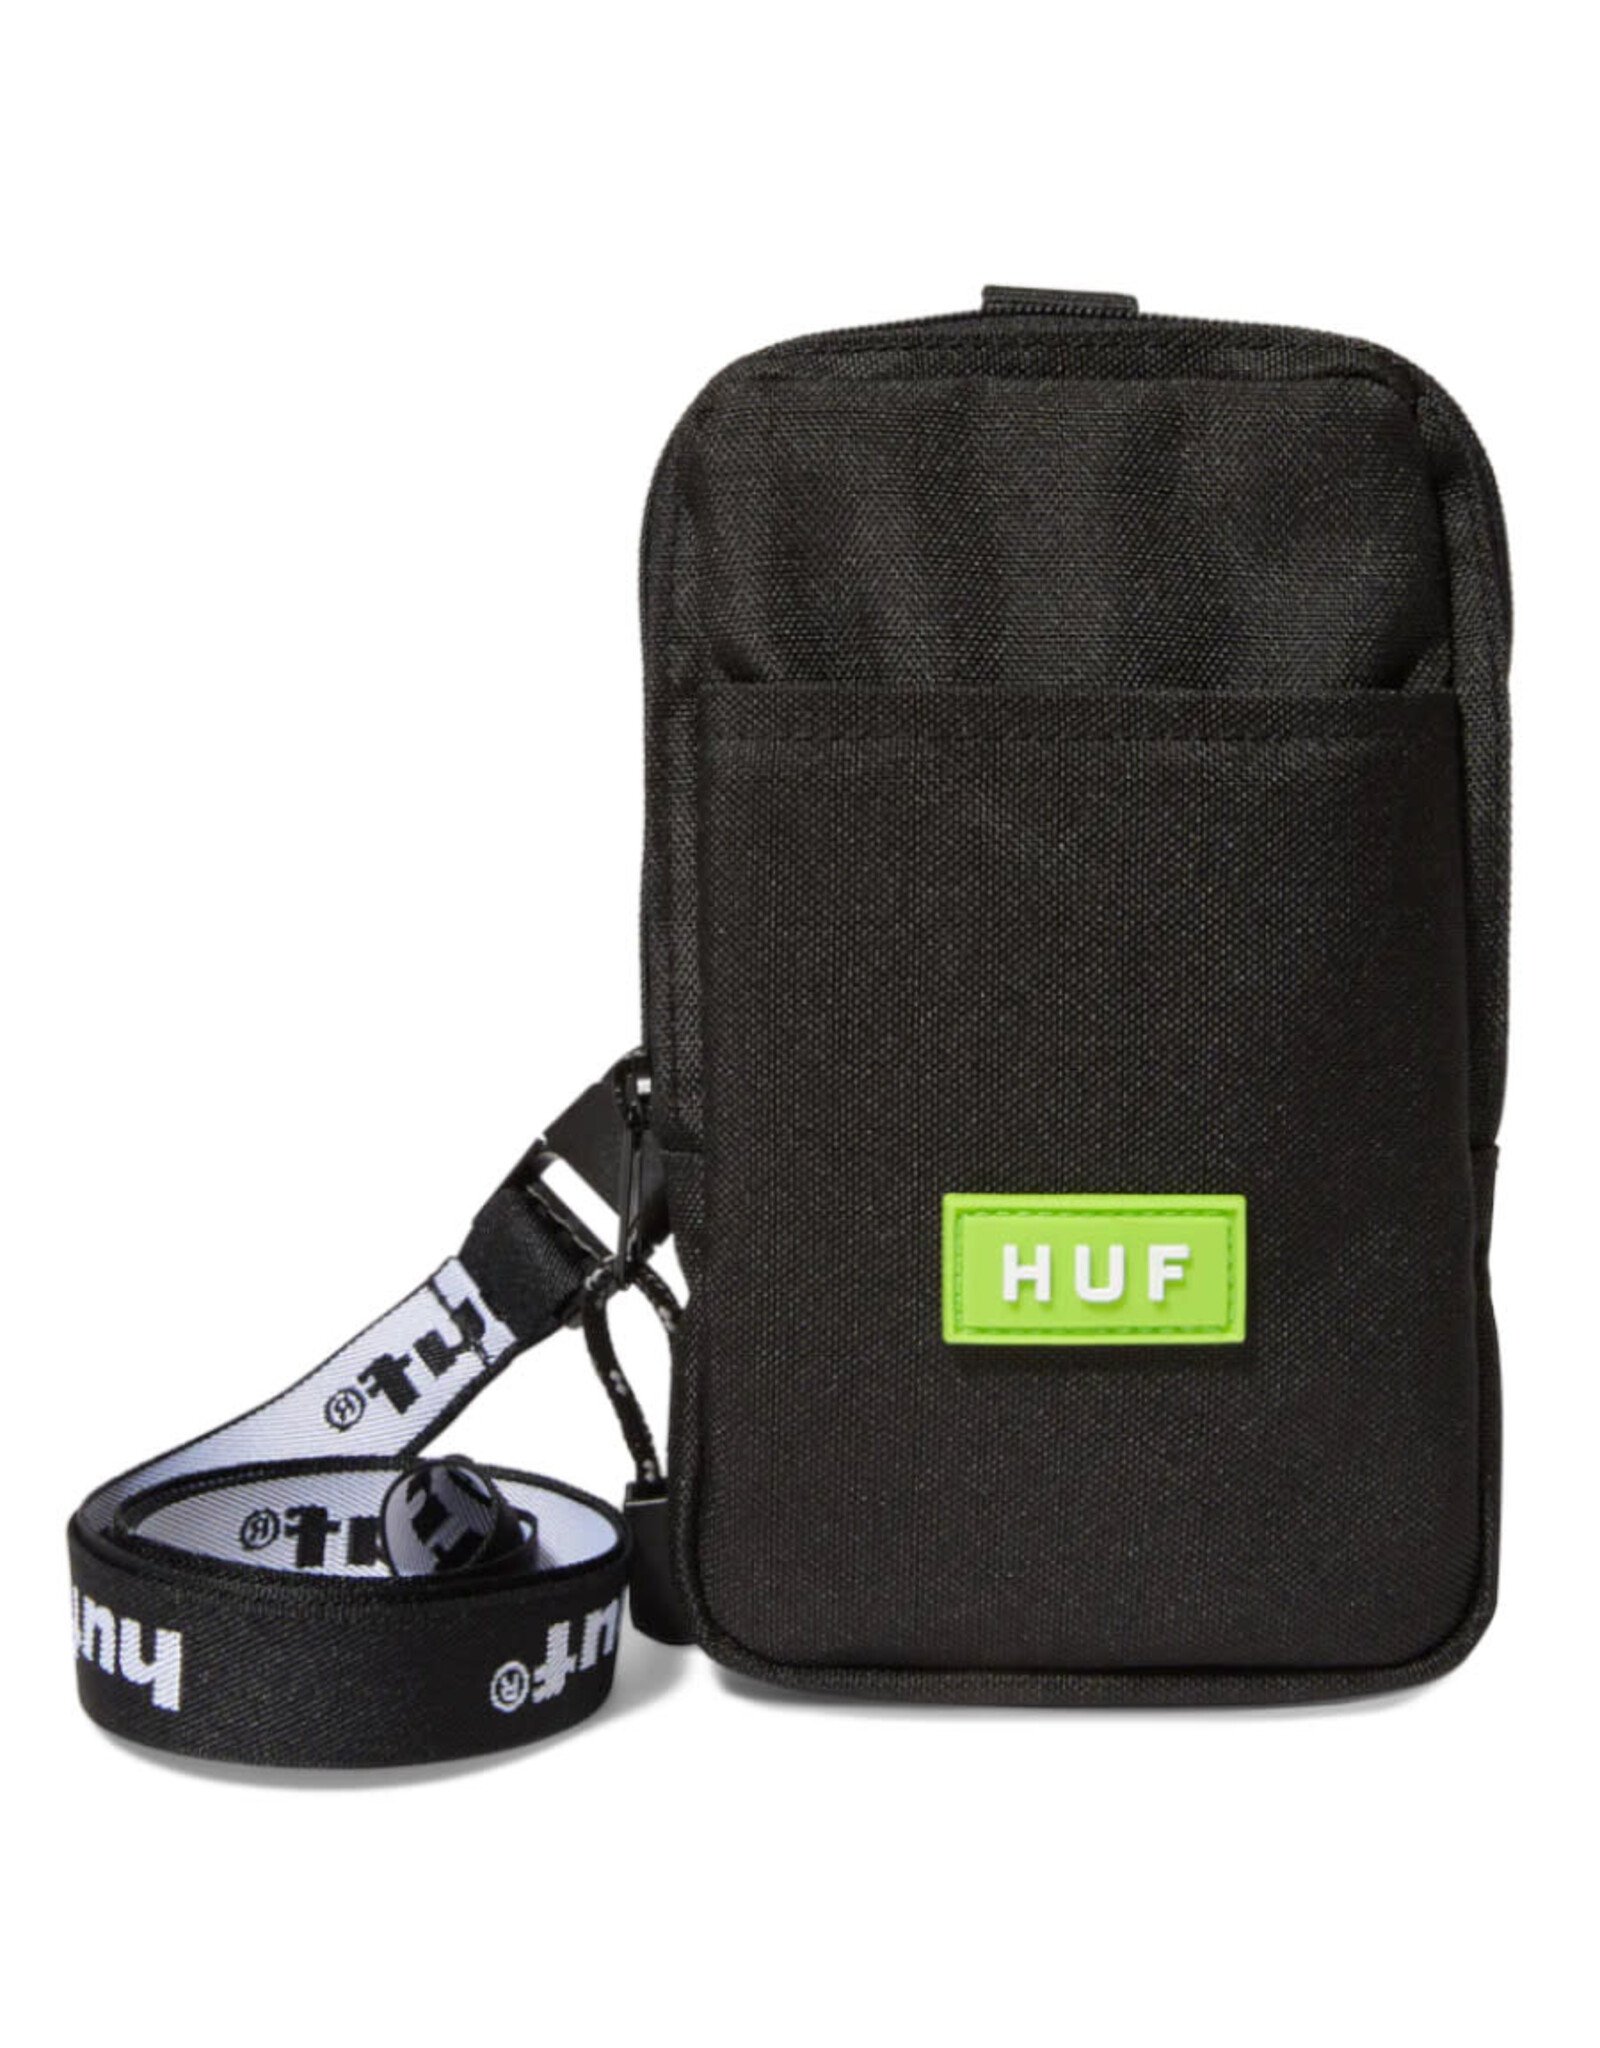 Huf Bag Recon Lanyard Pouch (Black) - Stix SGV